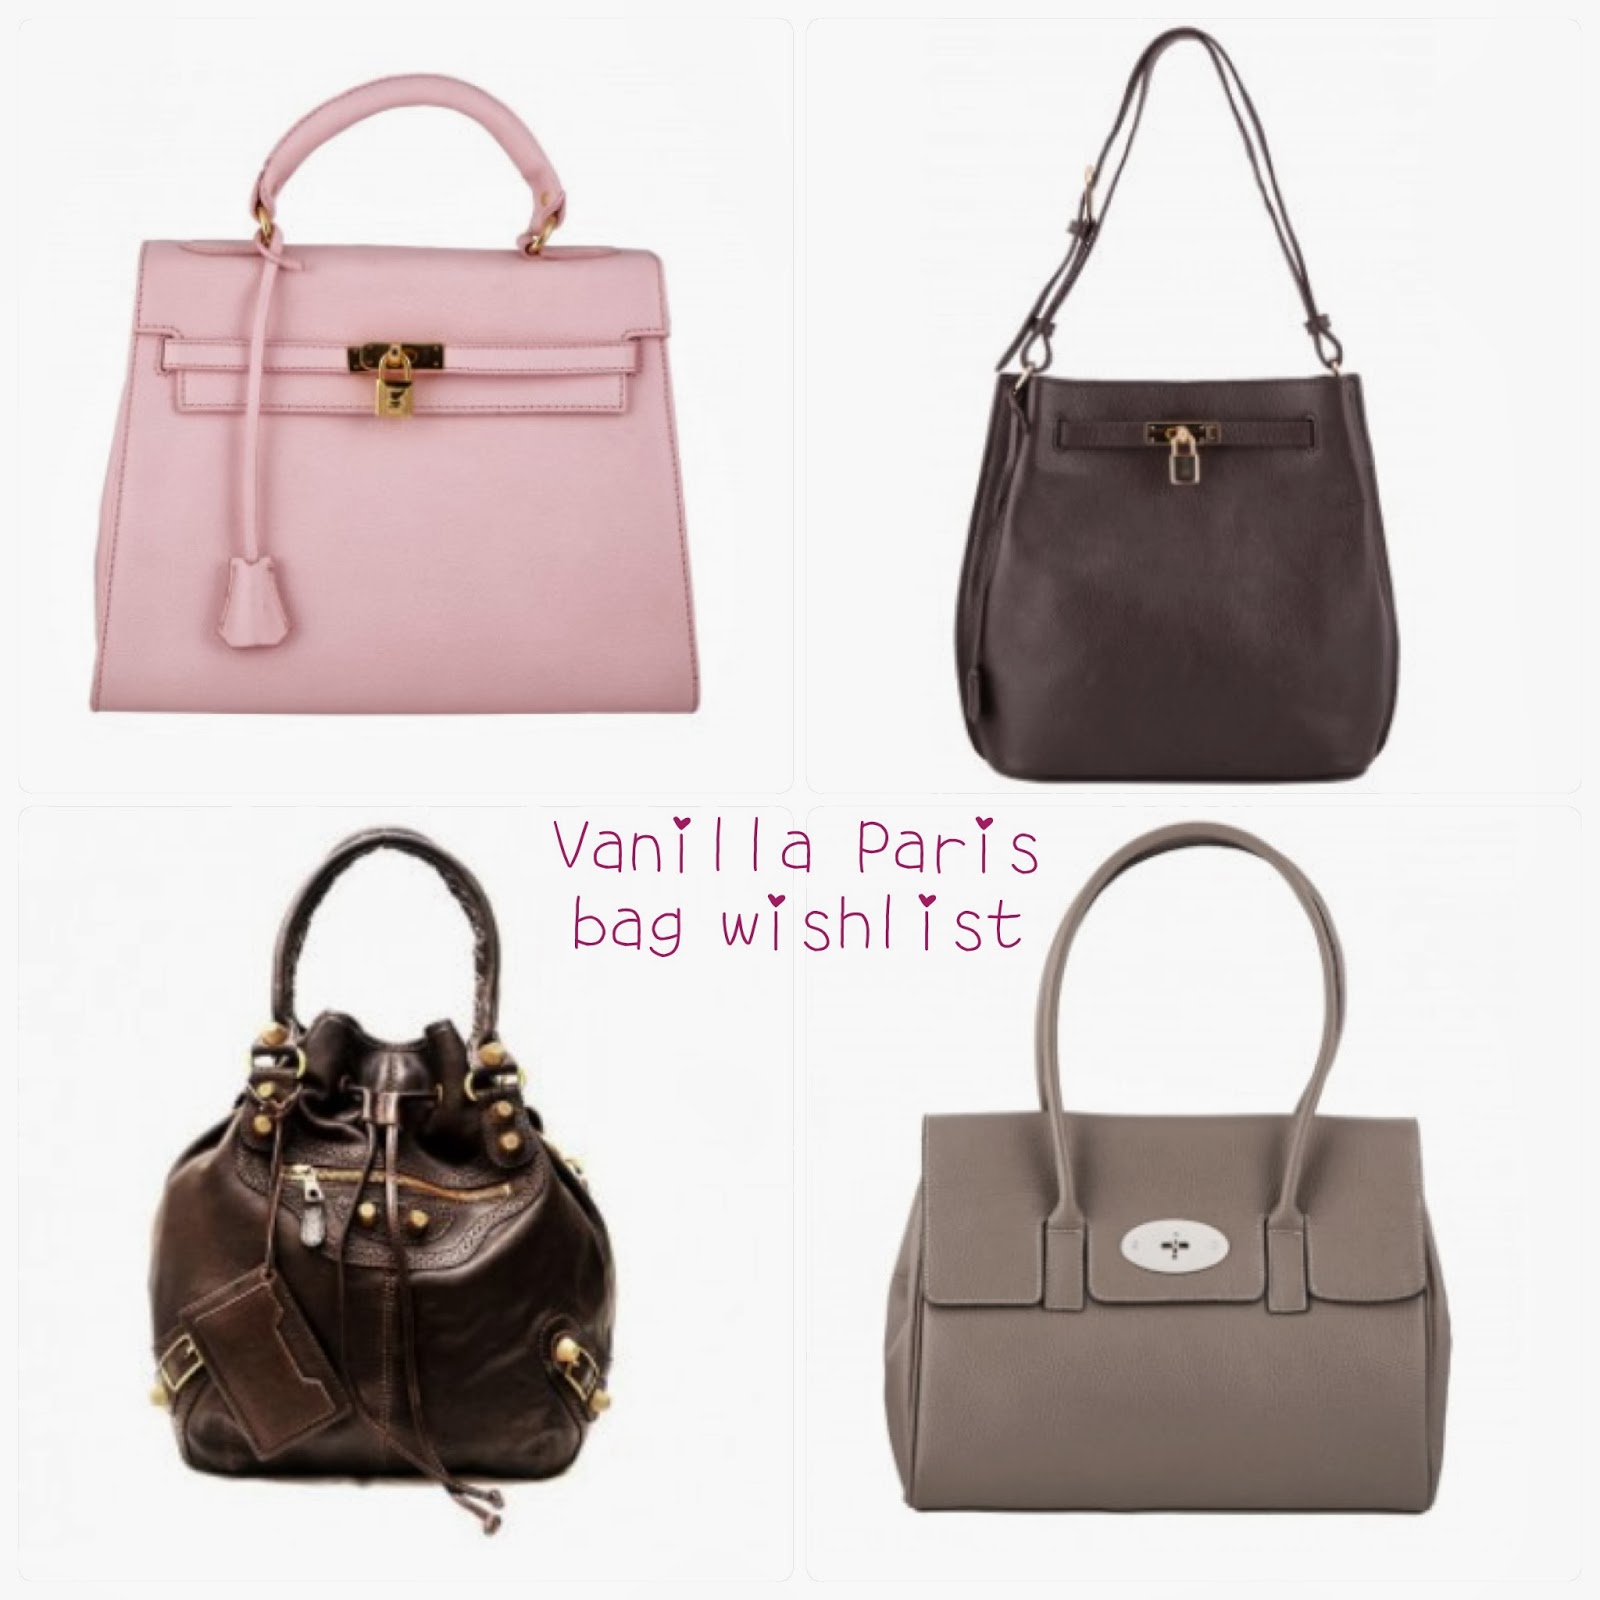 Paris Handbag Brands | SEMA Data Co-op